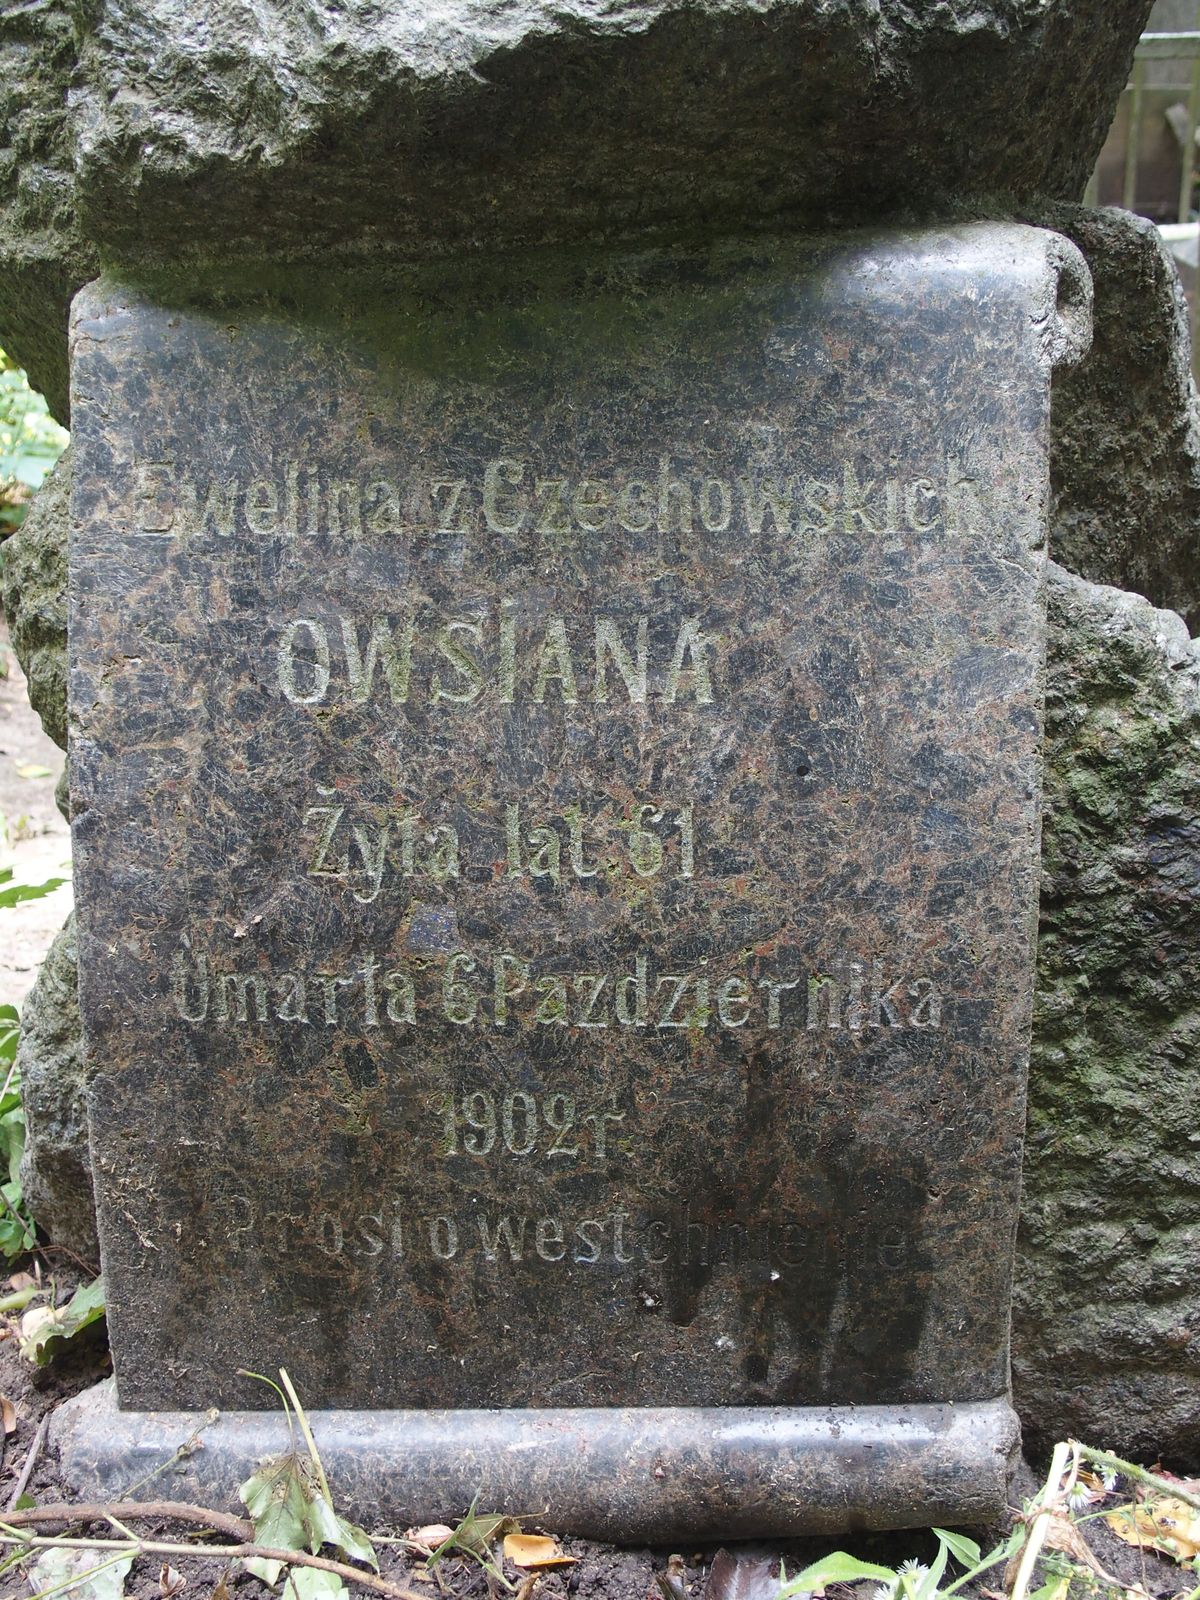 Inscription from the gravestone of Ewelina Owsiana, Bajkova cemetery in Kiev, as of 2021